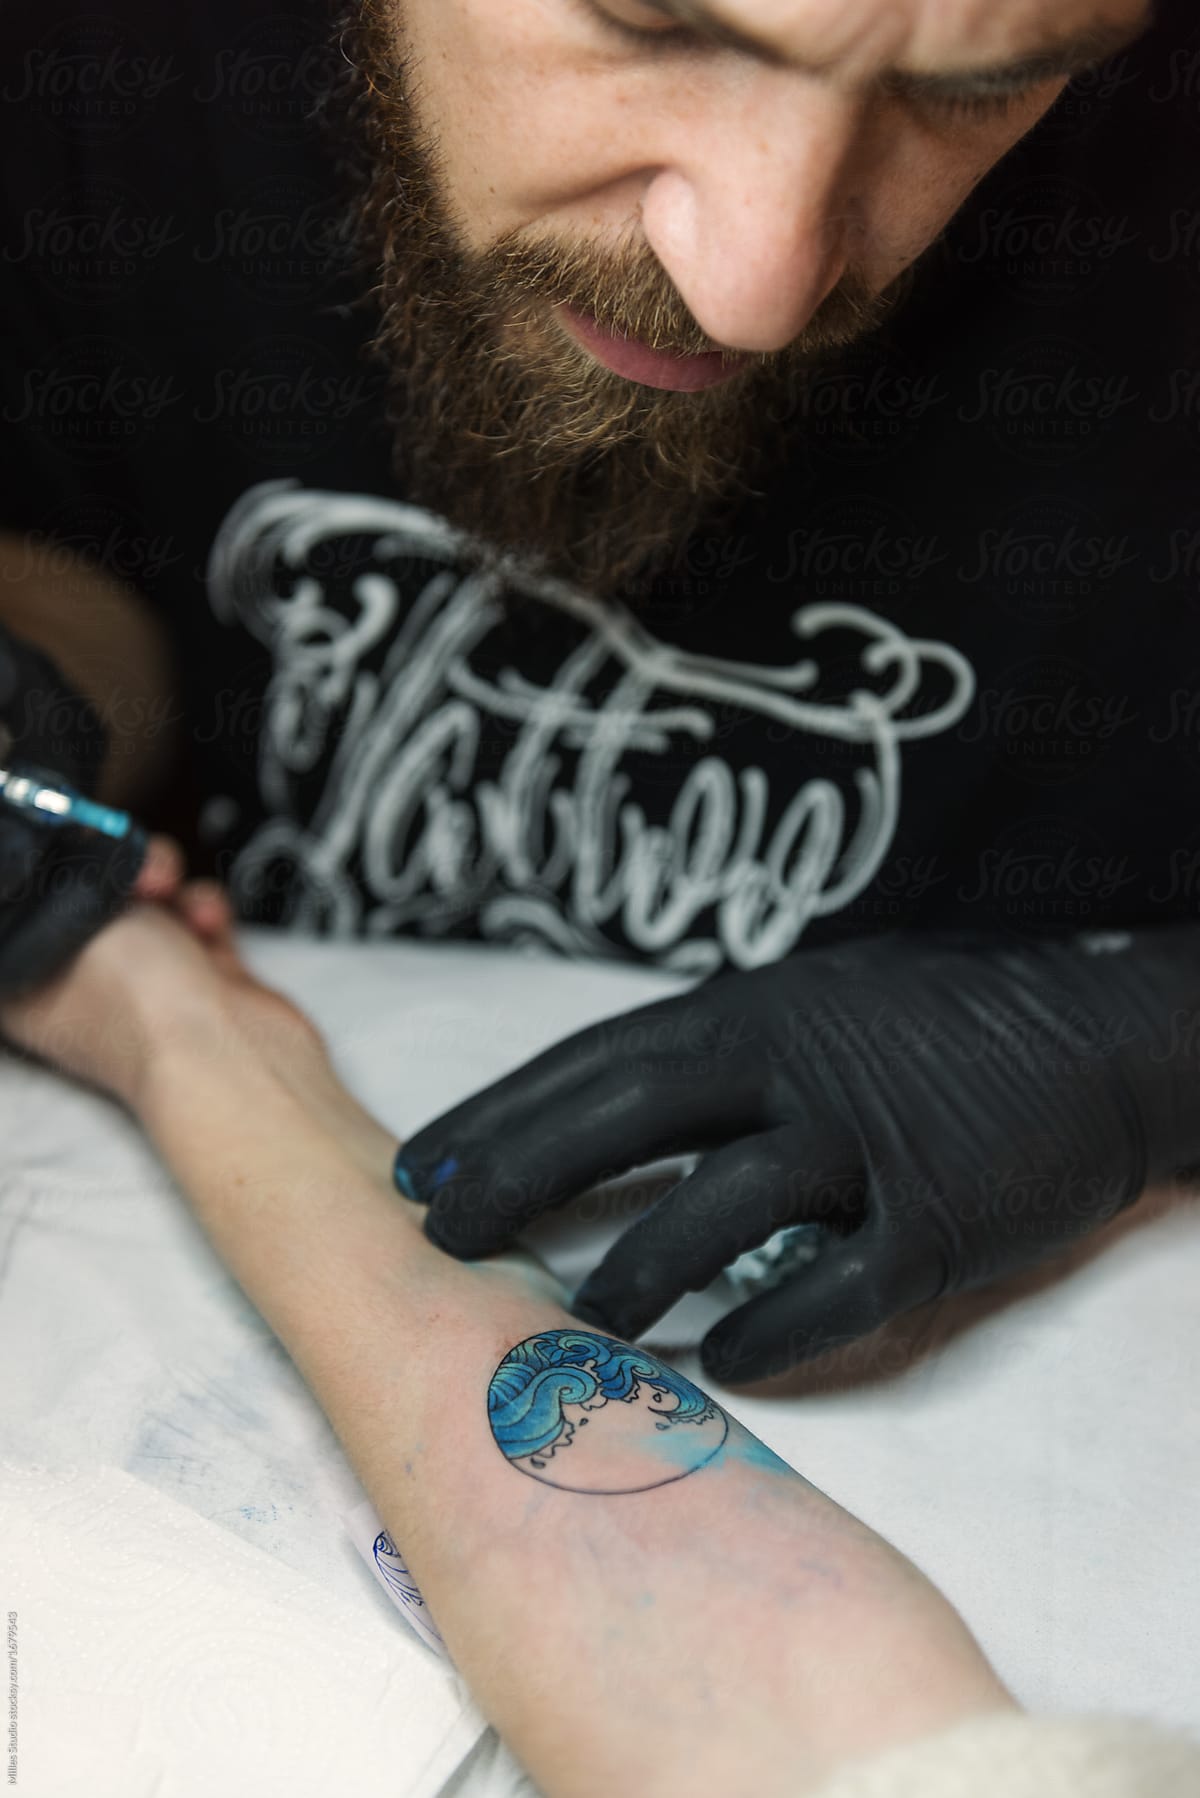 Master watching tattoo on arm